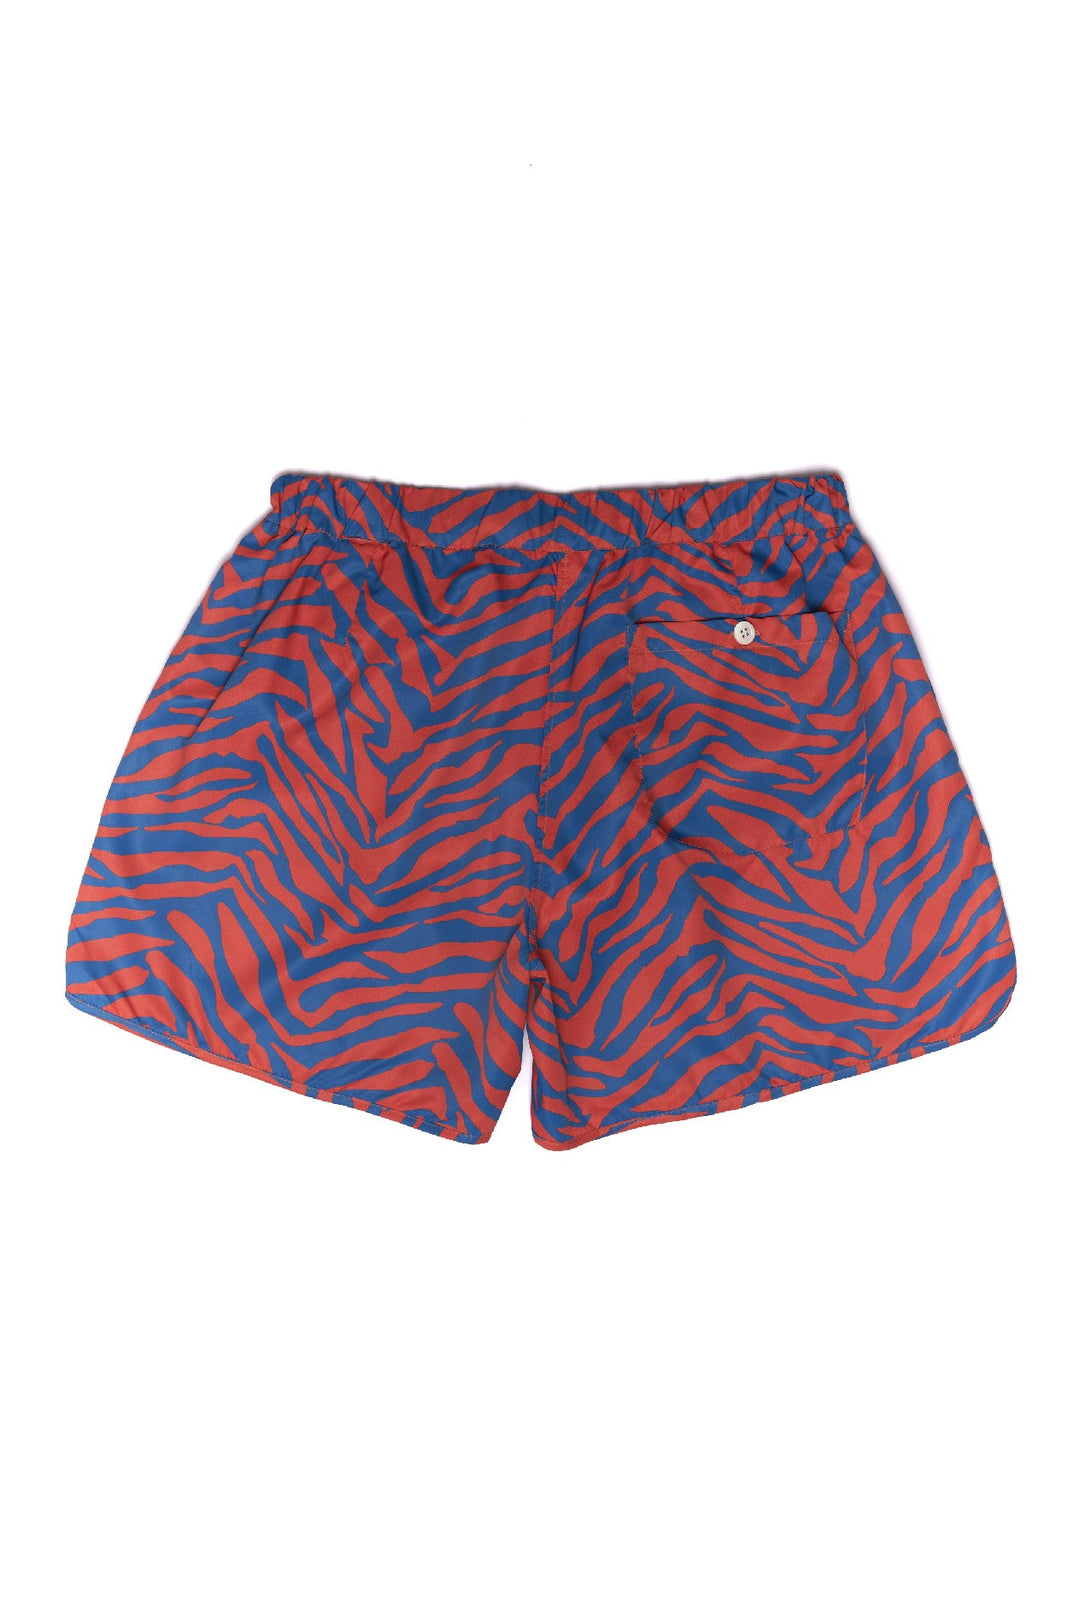 Red and blue zebra print swim trunks